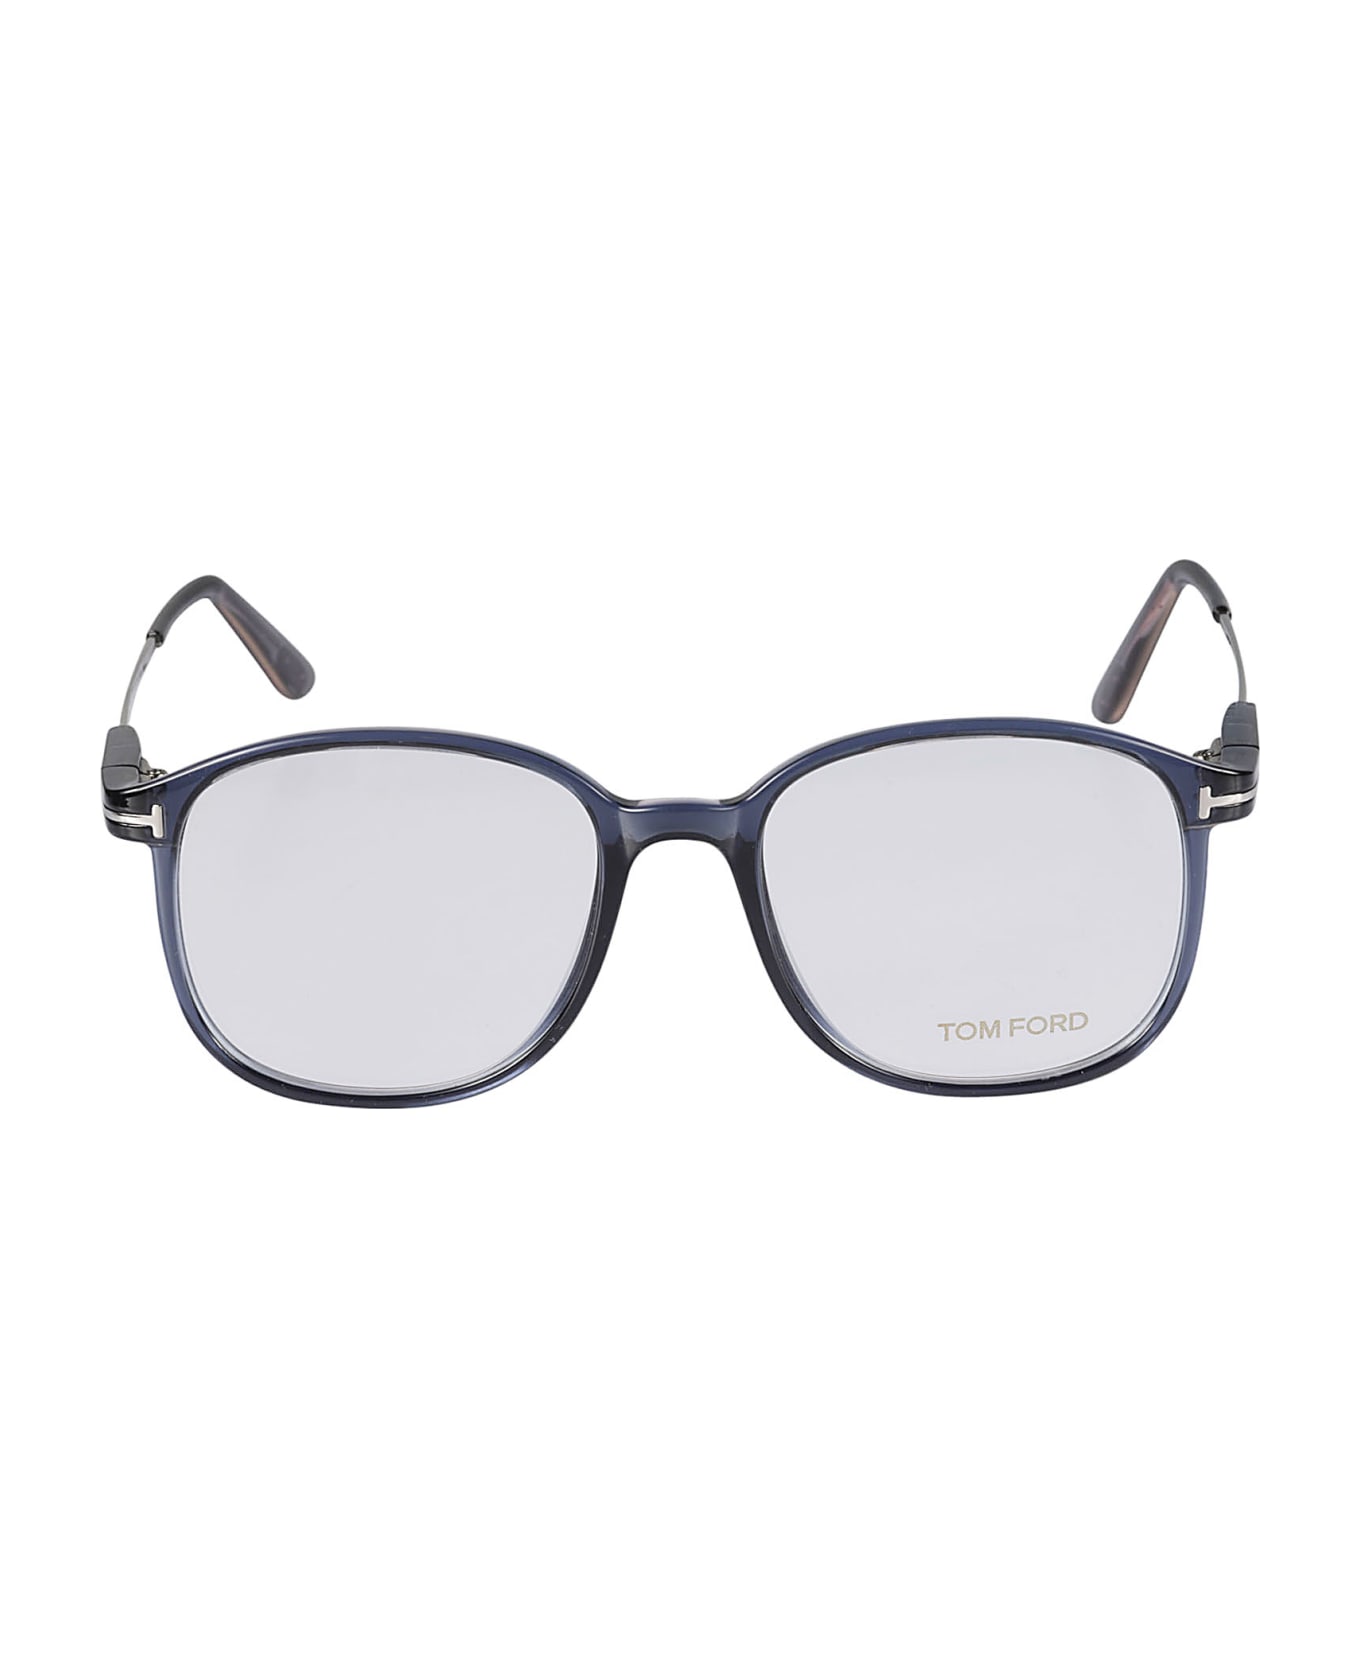 Tom Ford Eyewear Round Clear Lens Glasses - 090